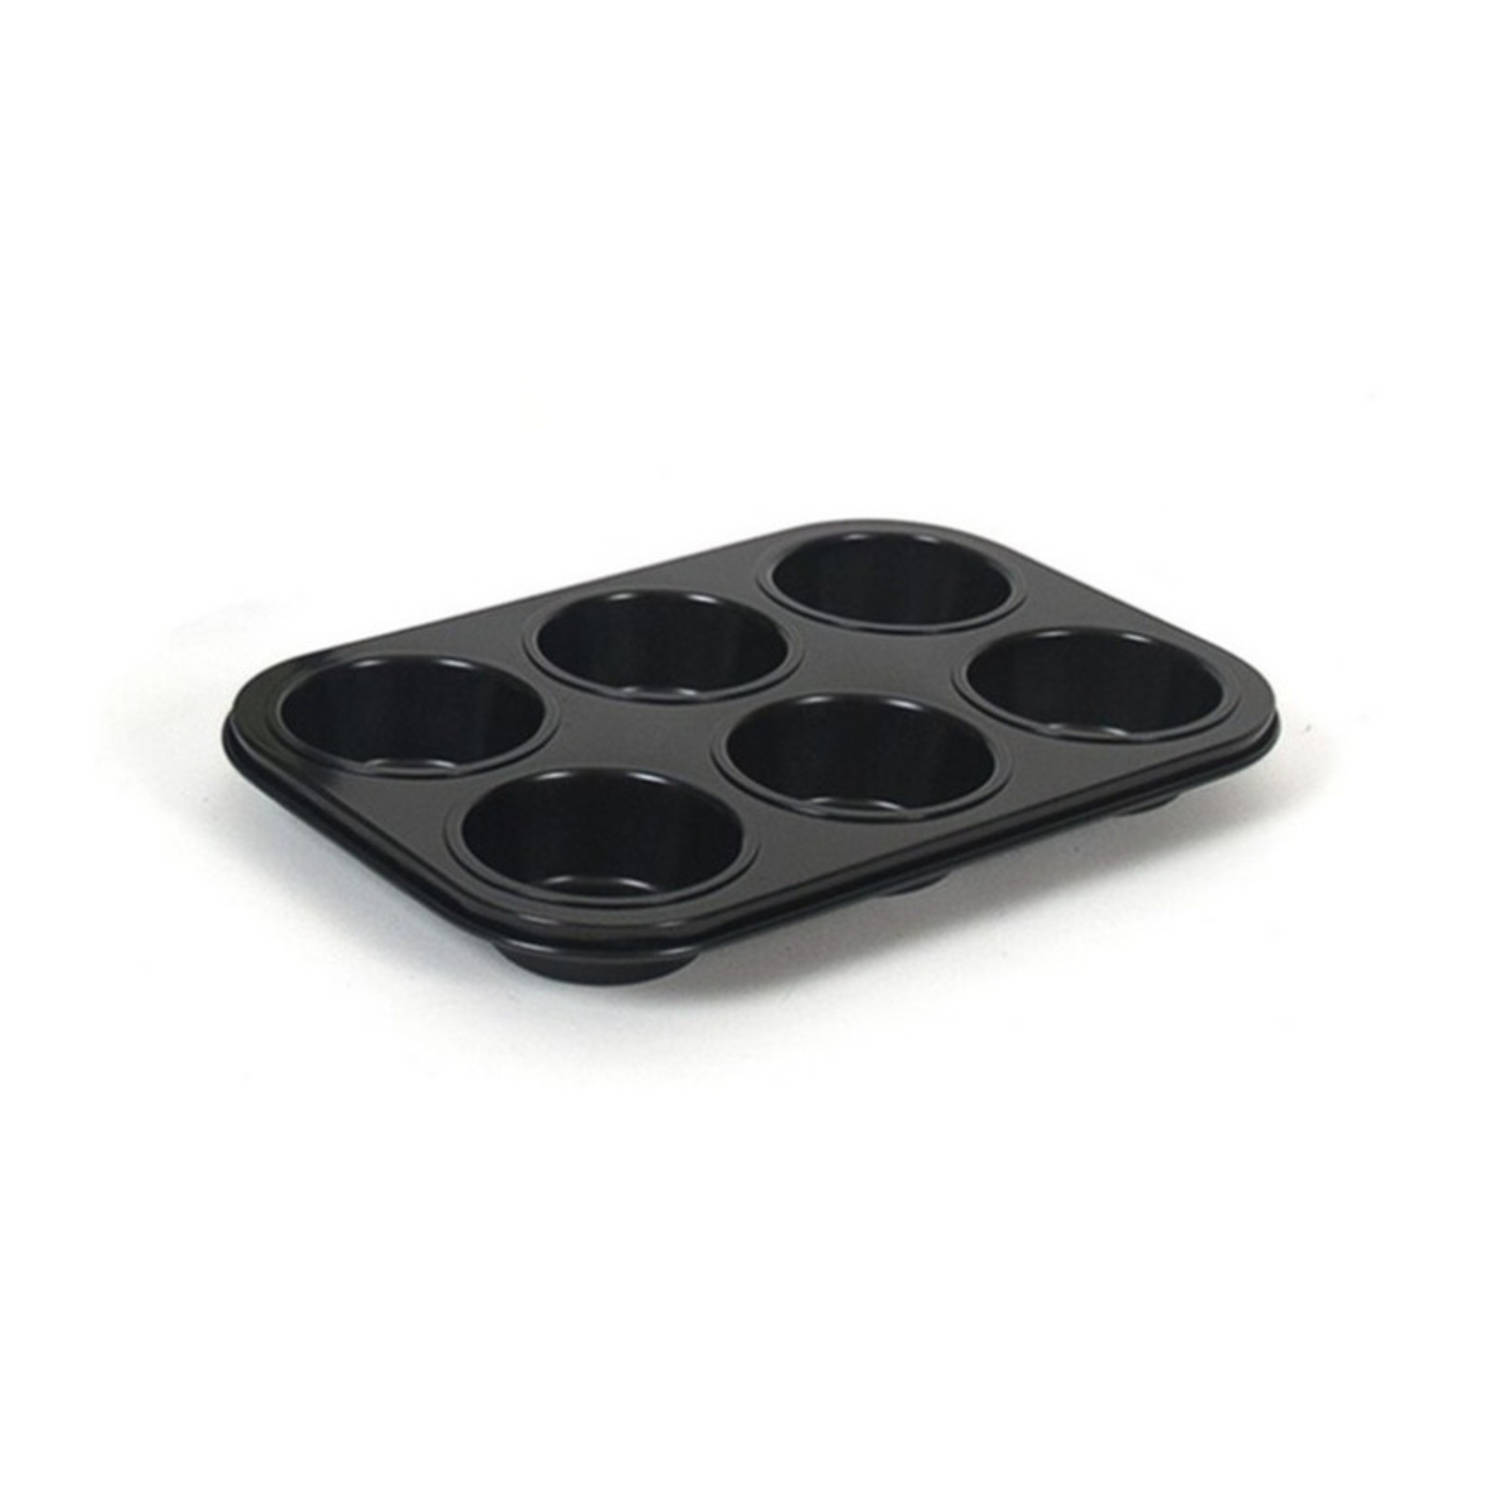 Muffin bakvorm/bakblik rechthoek 27 x 19 x 3 cm zwart - Muffinvormen / cupcakevormen